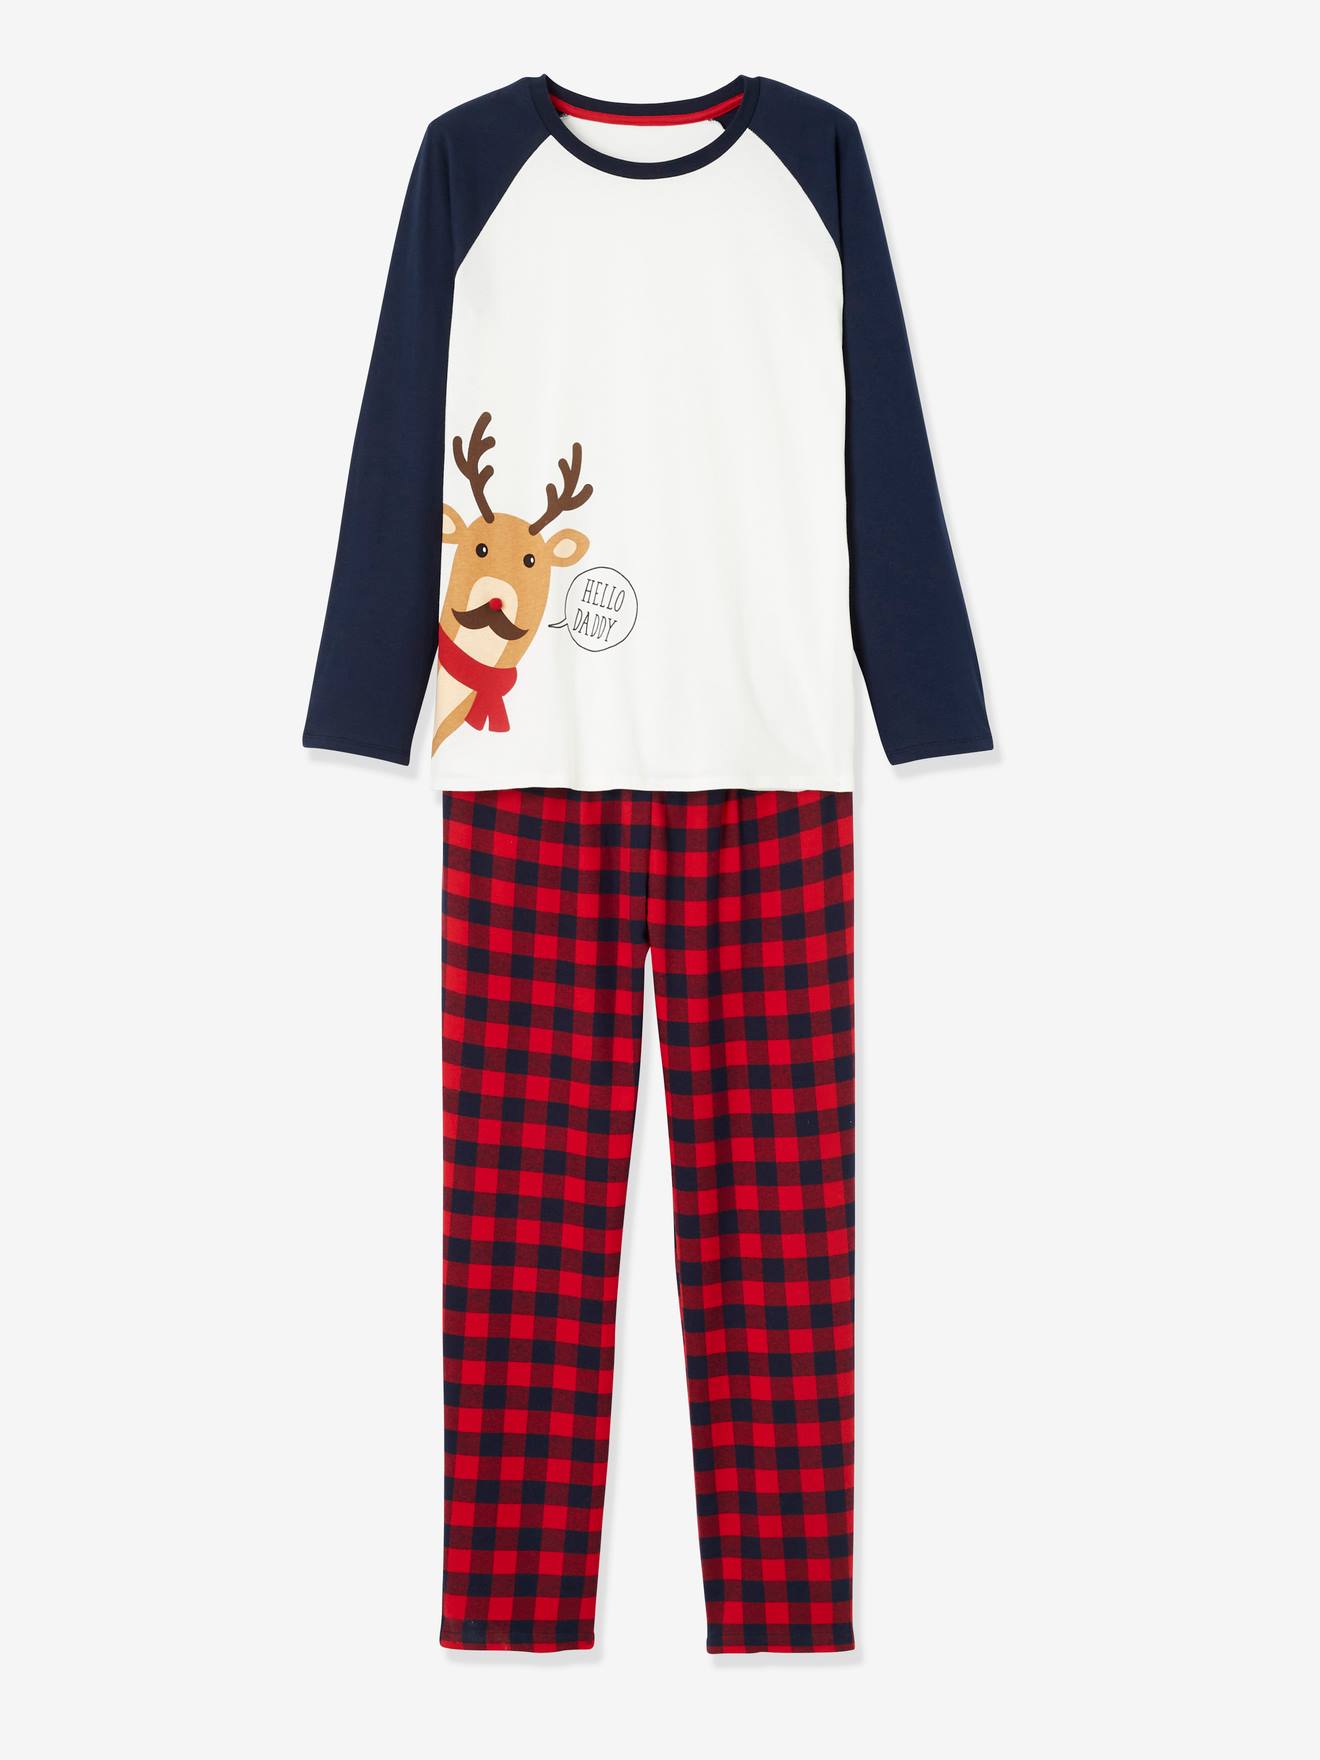 Pyjama Noël homme / Pyjama famille - beige avec anim et bas à